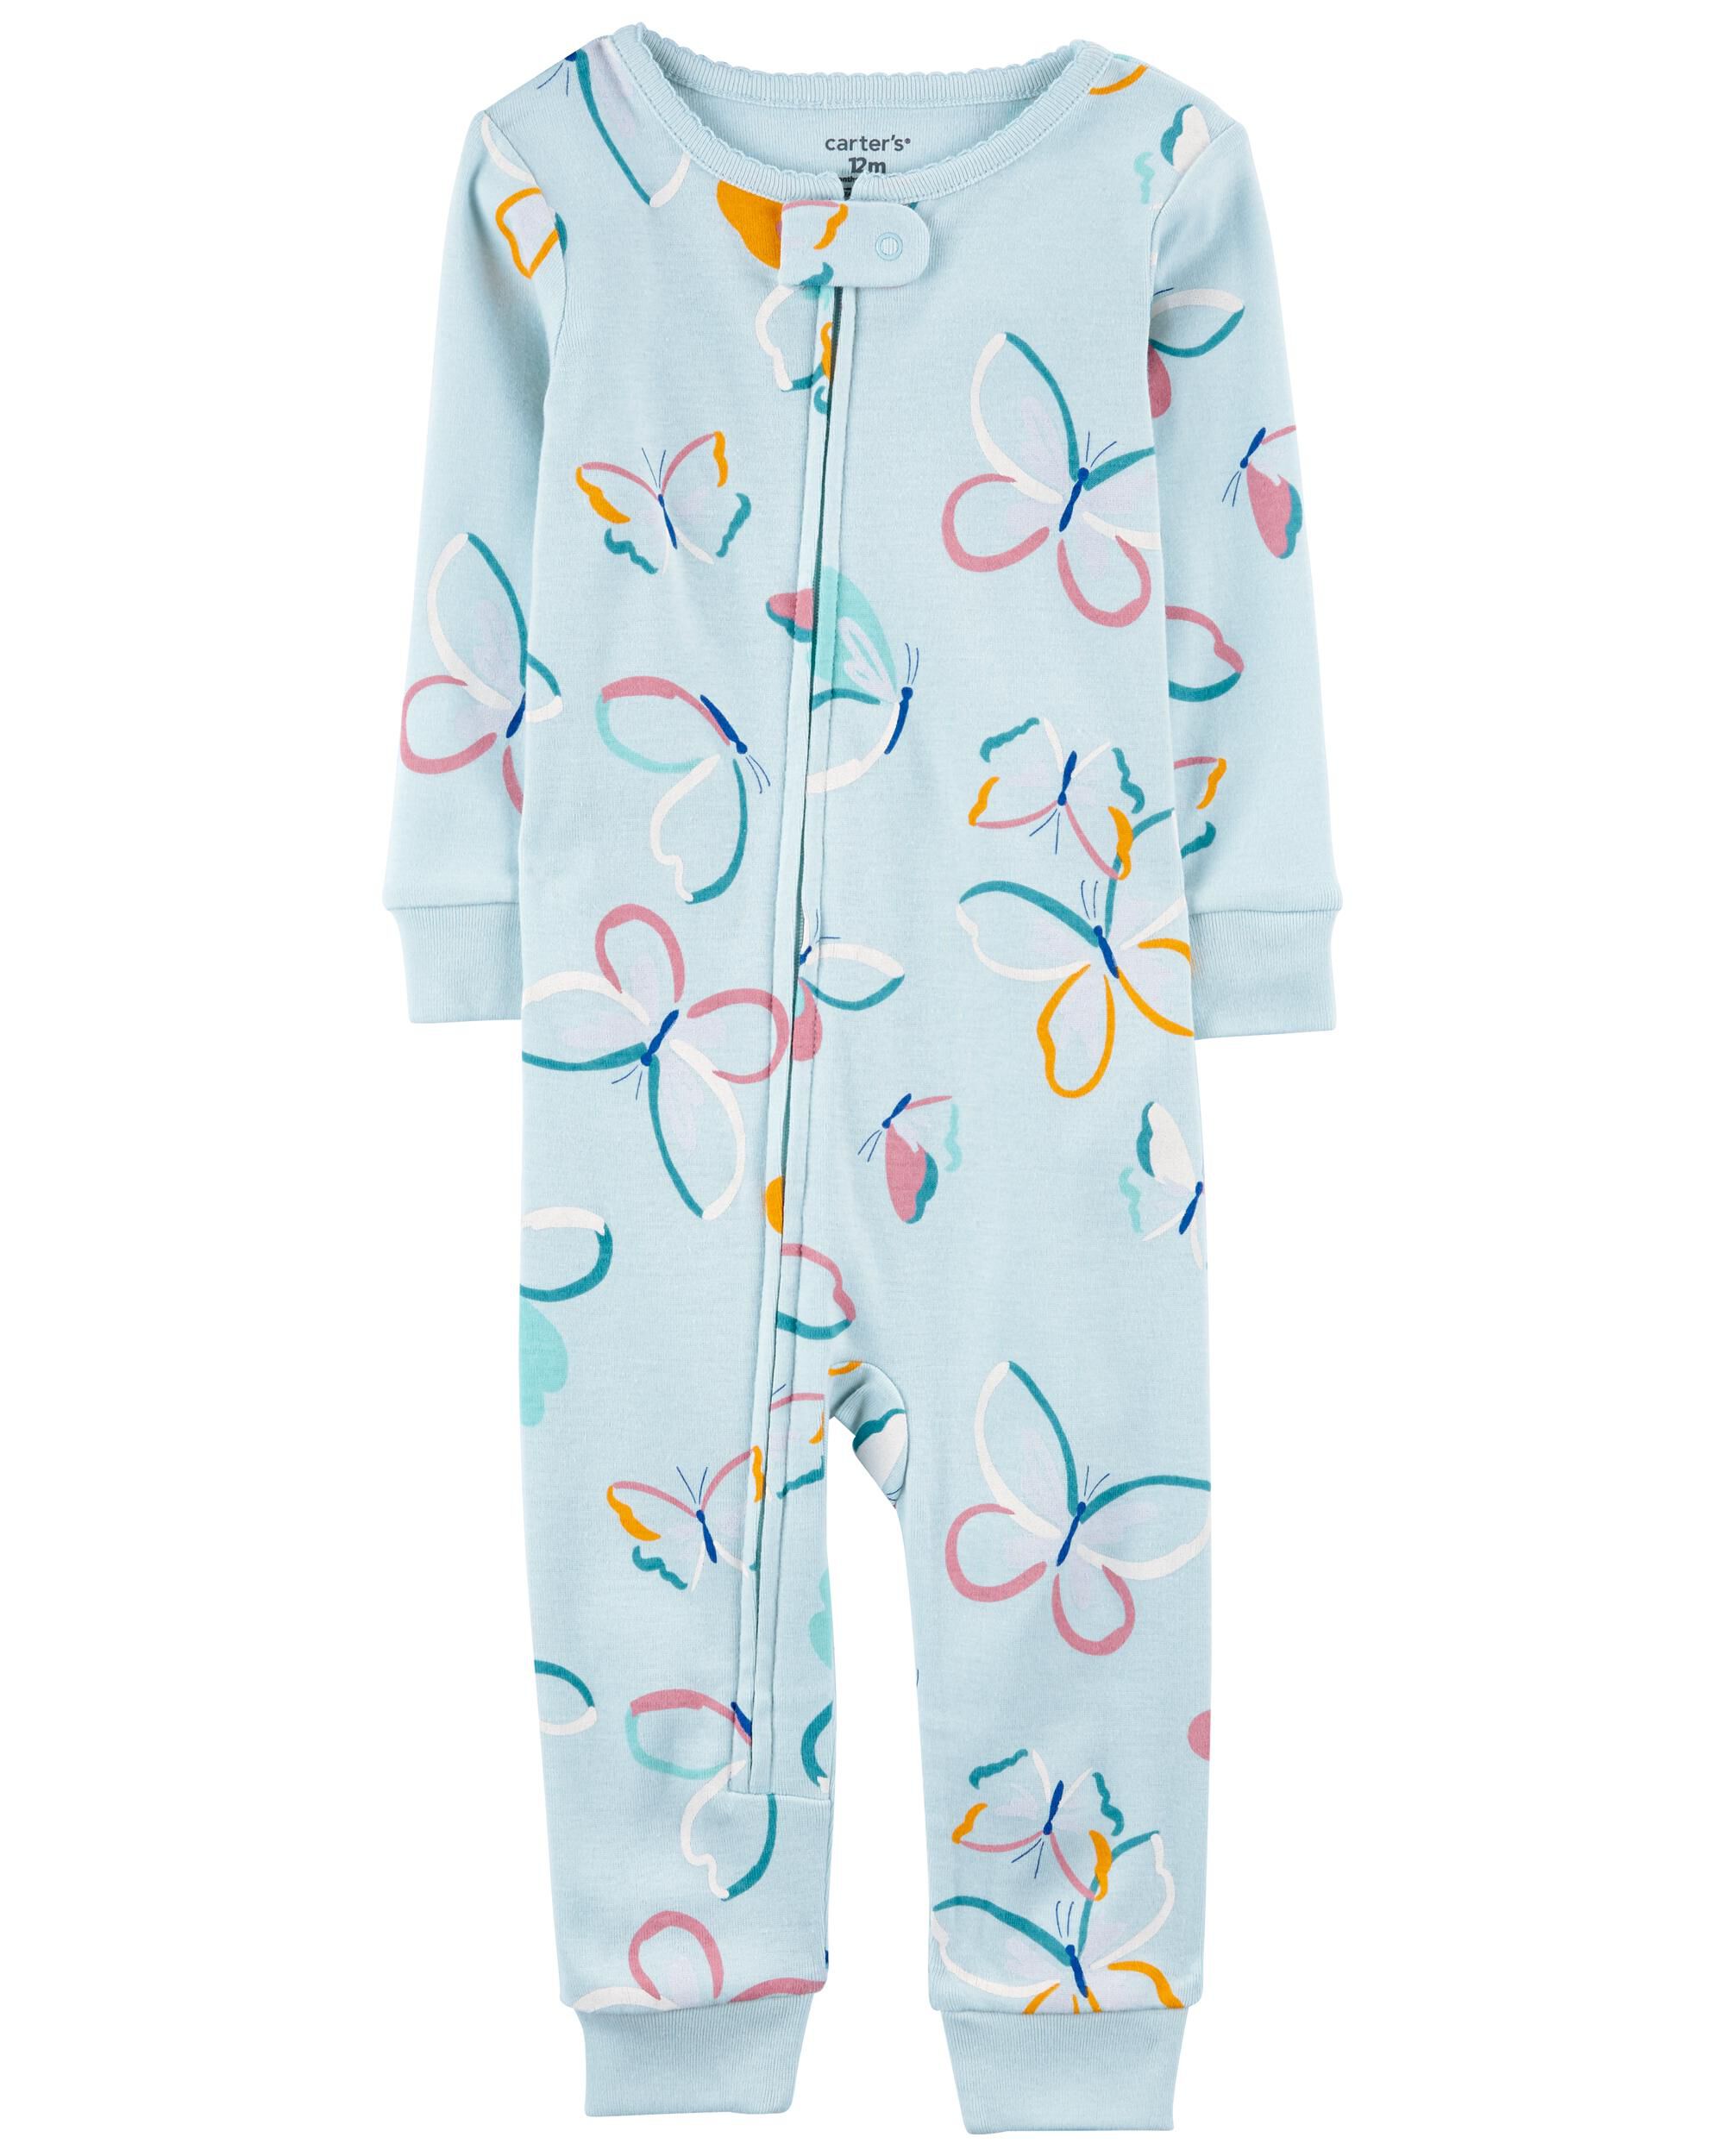 Girls Toddler Carter's Fleece Footed Pajama Sleepwear 6M 12M 18M 24M 2T 3T 4T 5T 